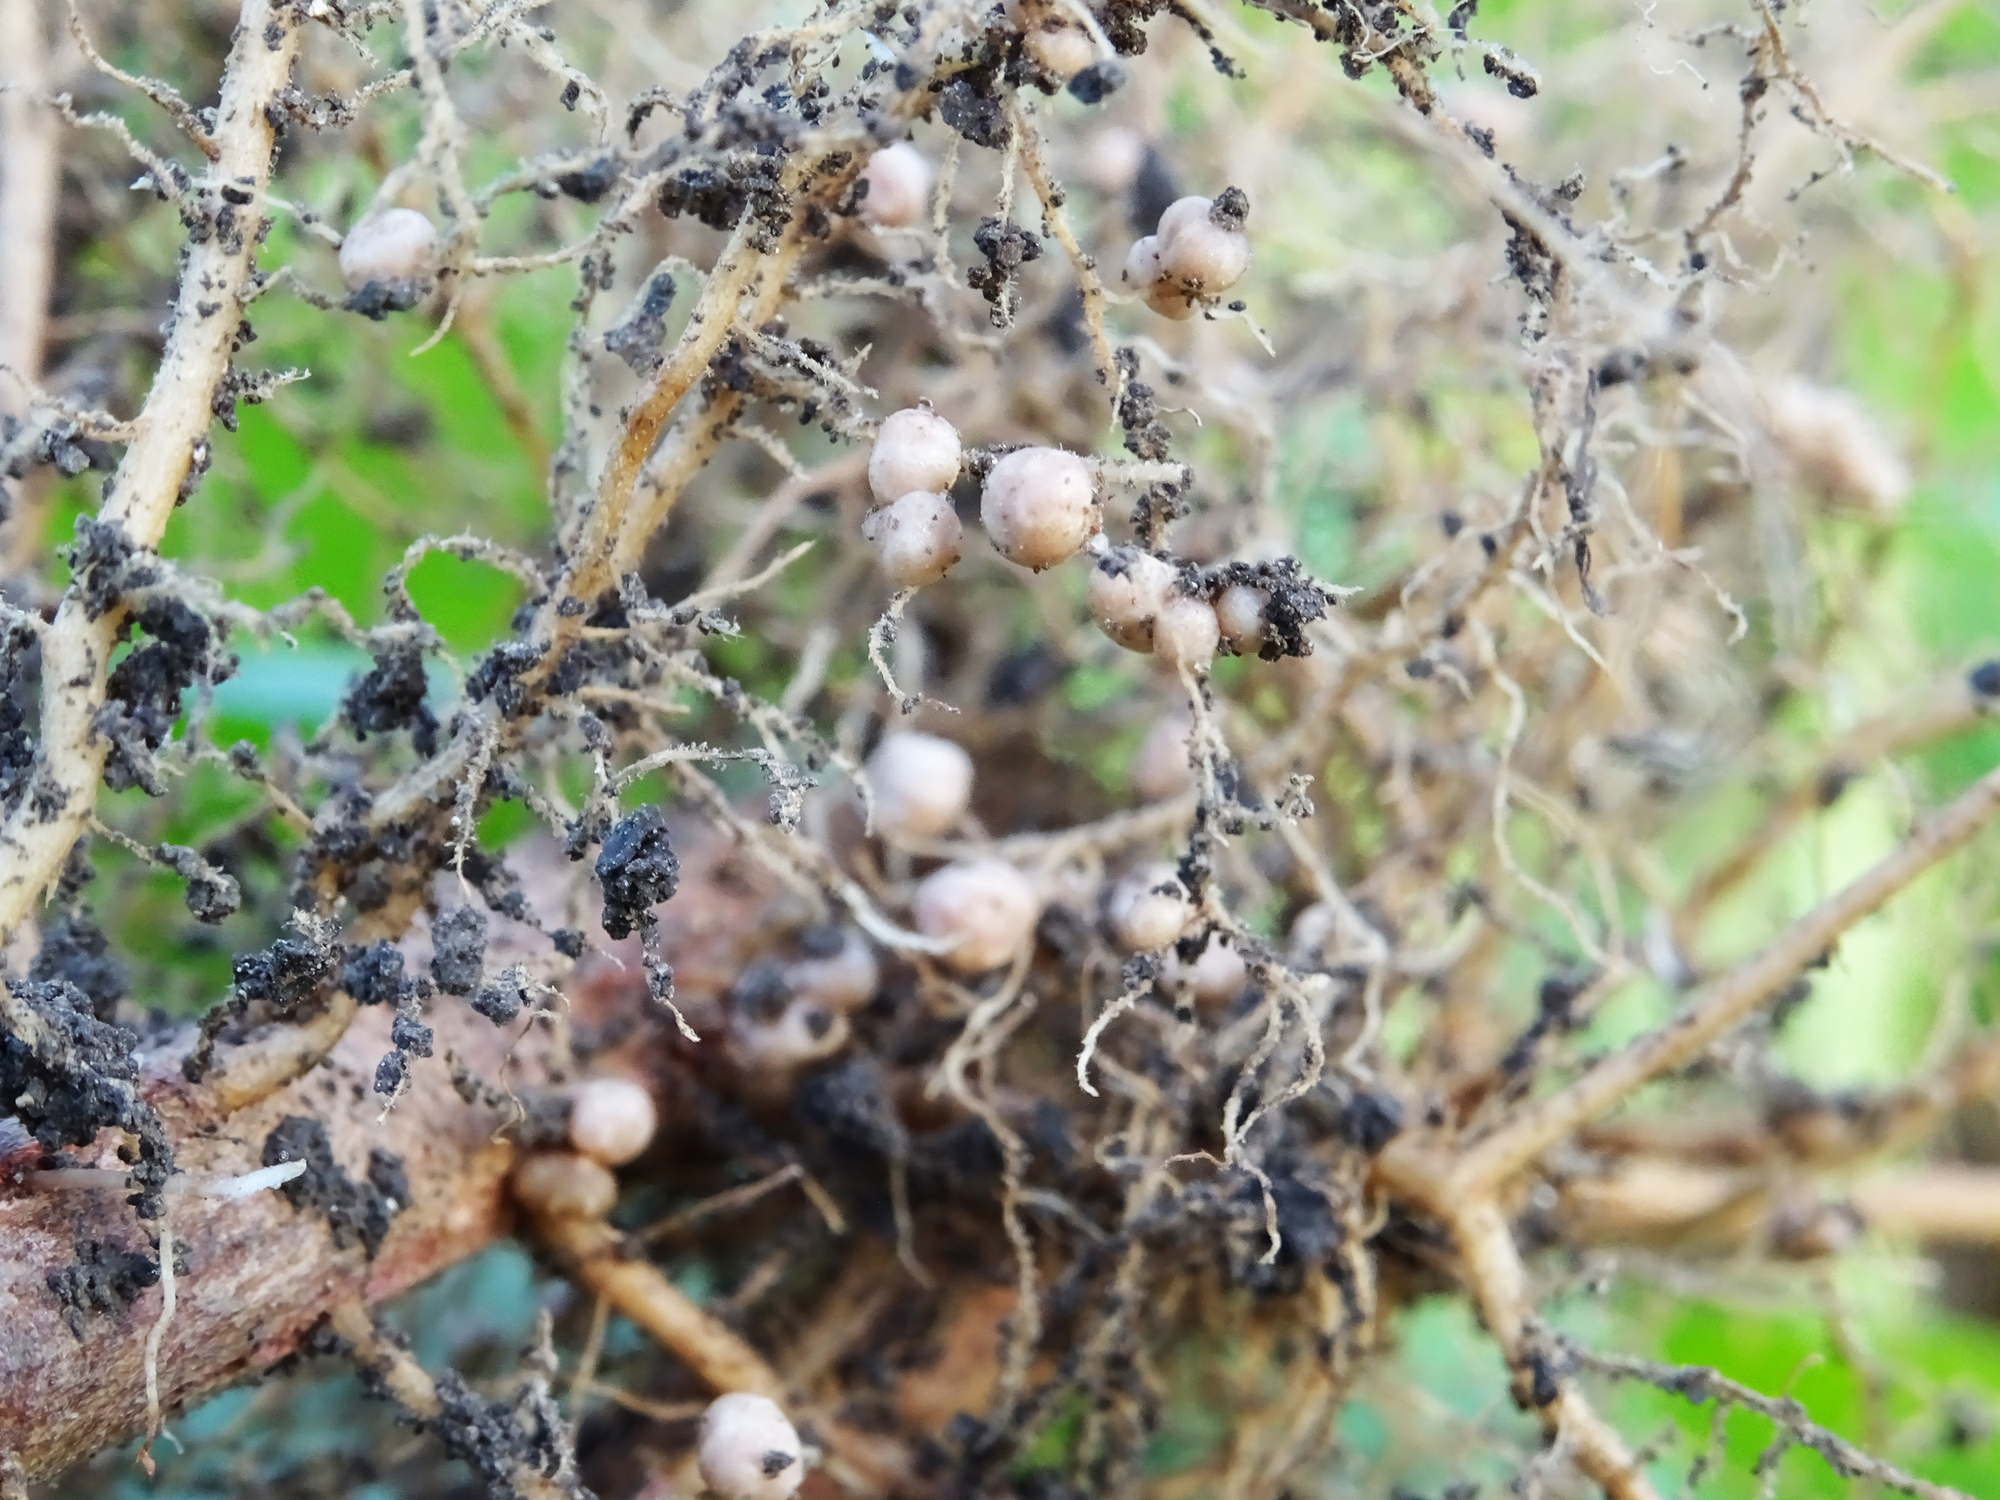 nitrogen fixation on legume plant roots